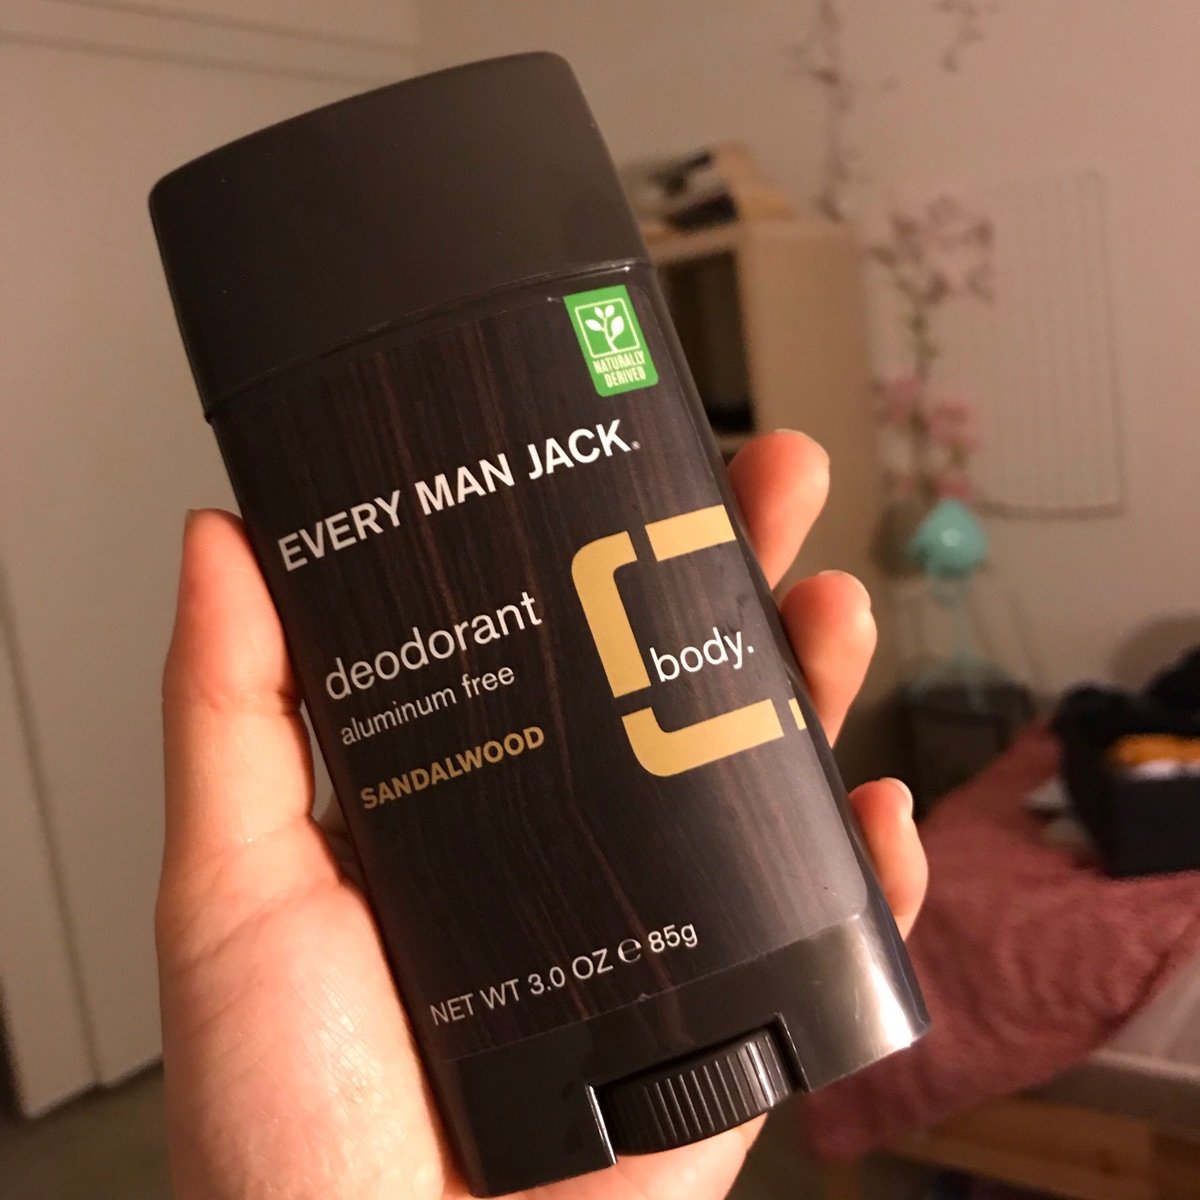 Every Man Jack Sandalwood Deodorant - Aluminum Free Reviews | abillion